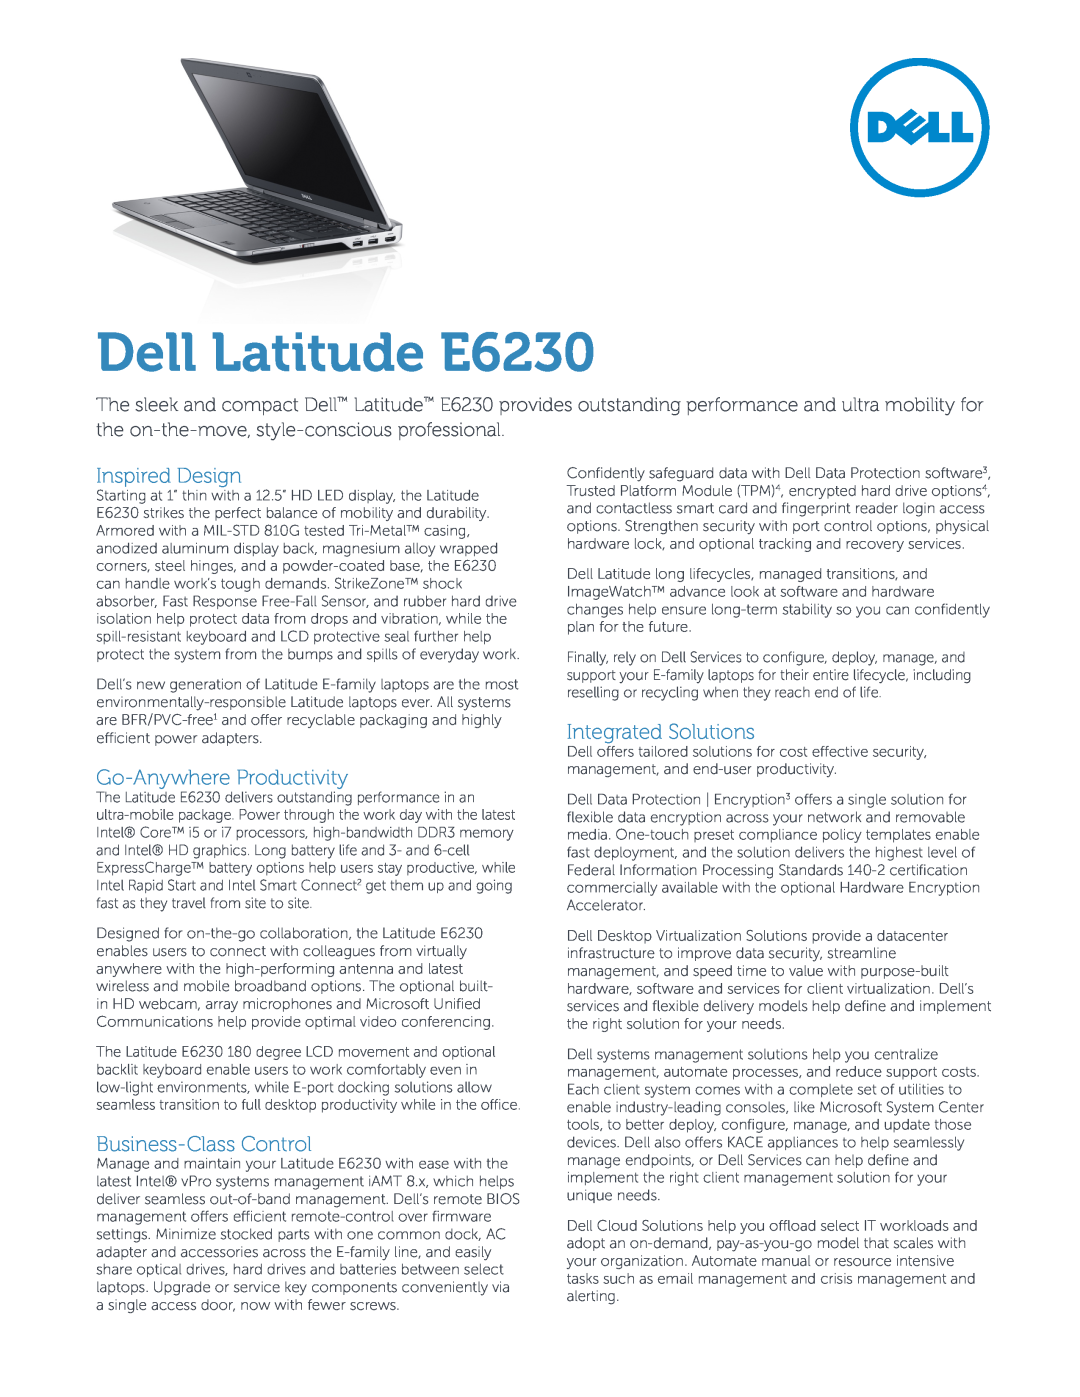 Dell manual Dell Latitude E6230, Inspired Design, Go-Anywhere Productivity, Business-Class Control 